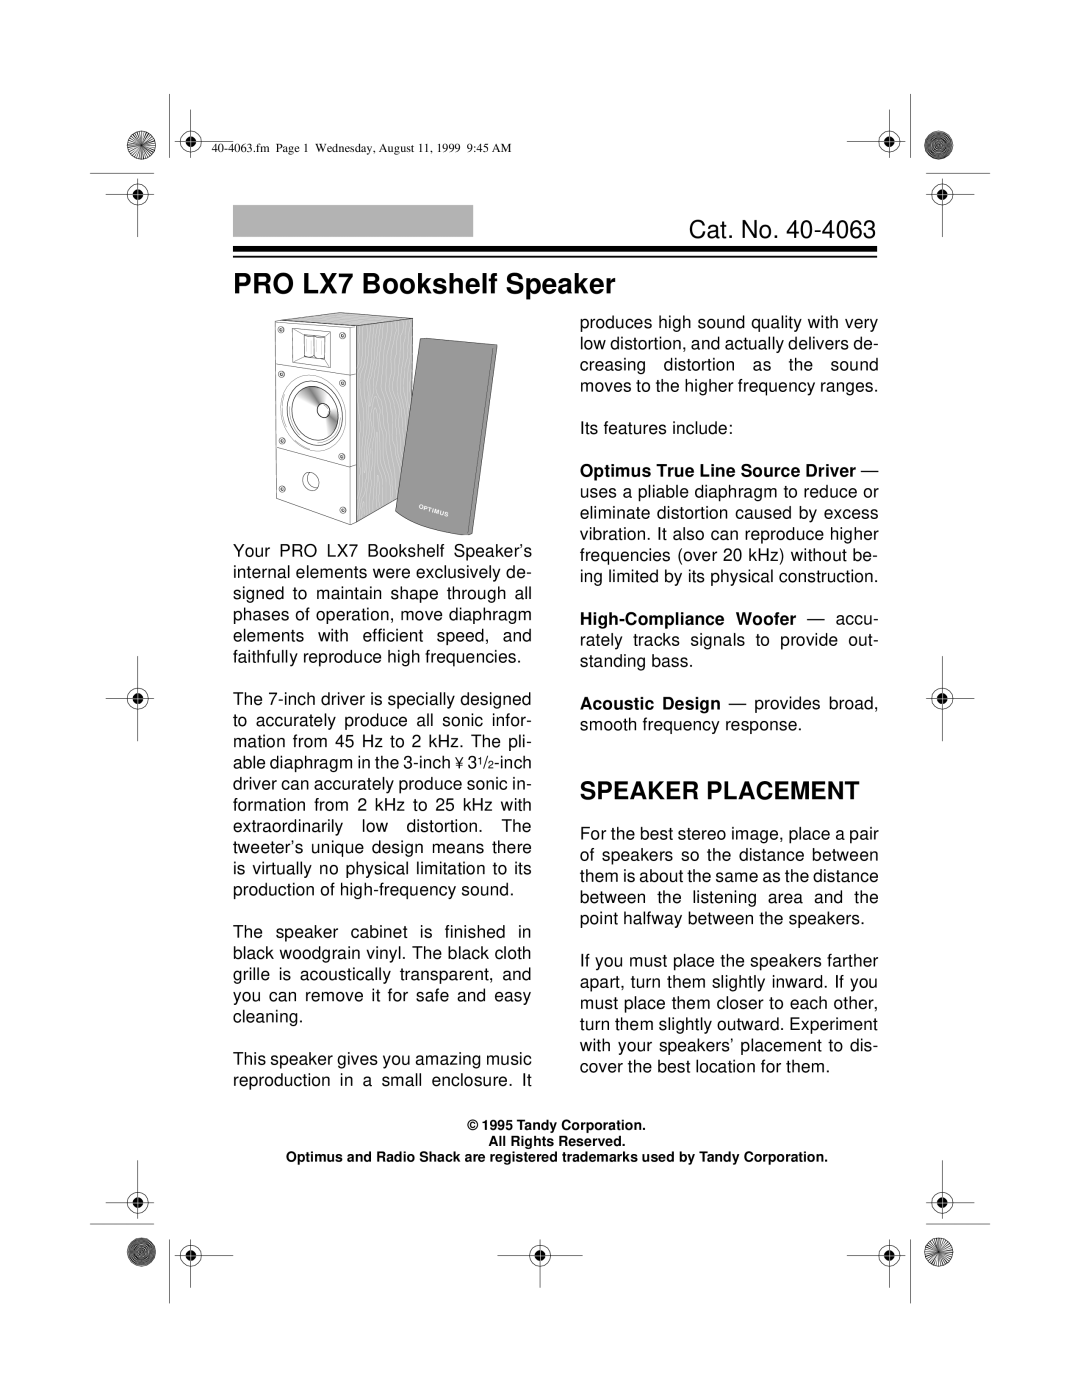 Radio Shack manual Speaker Placement, PRO LX7 Bookshelf Speaker, Cat. No 